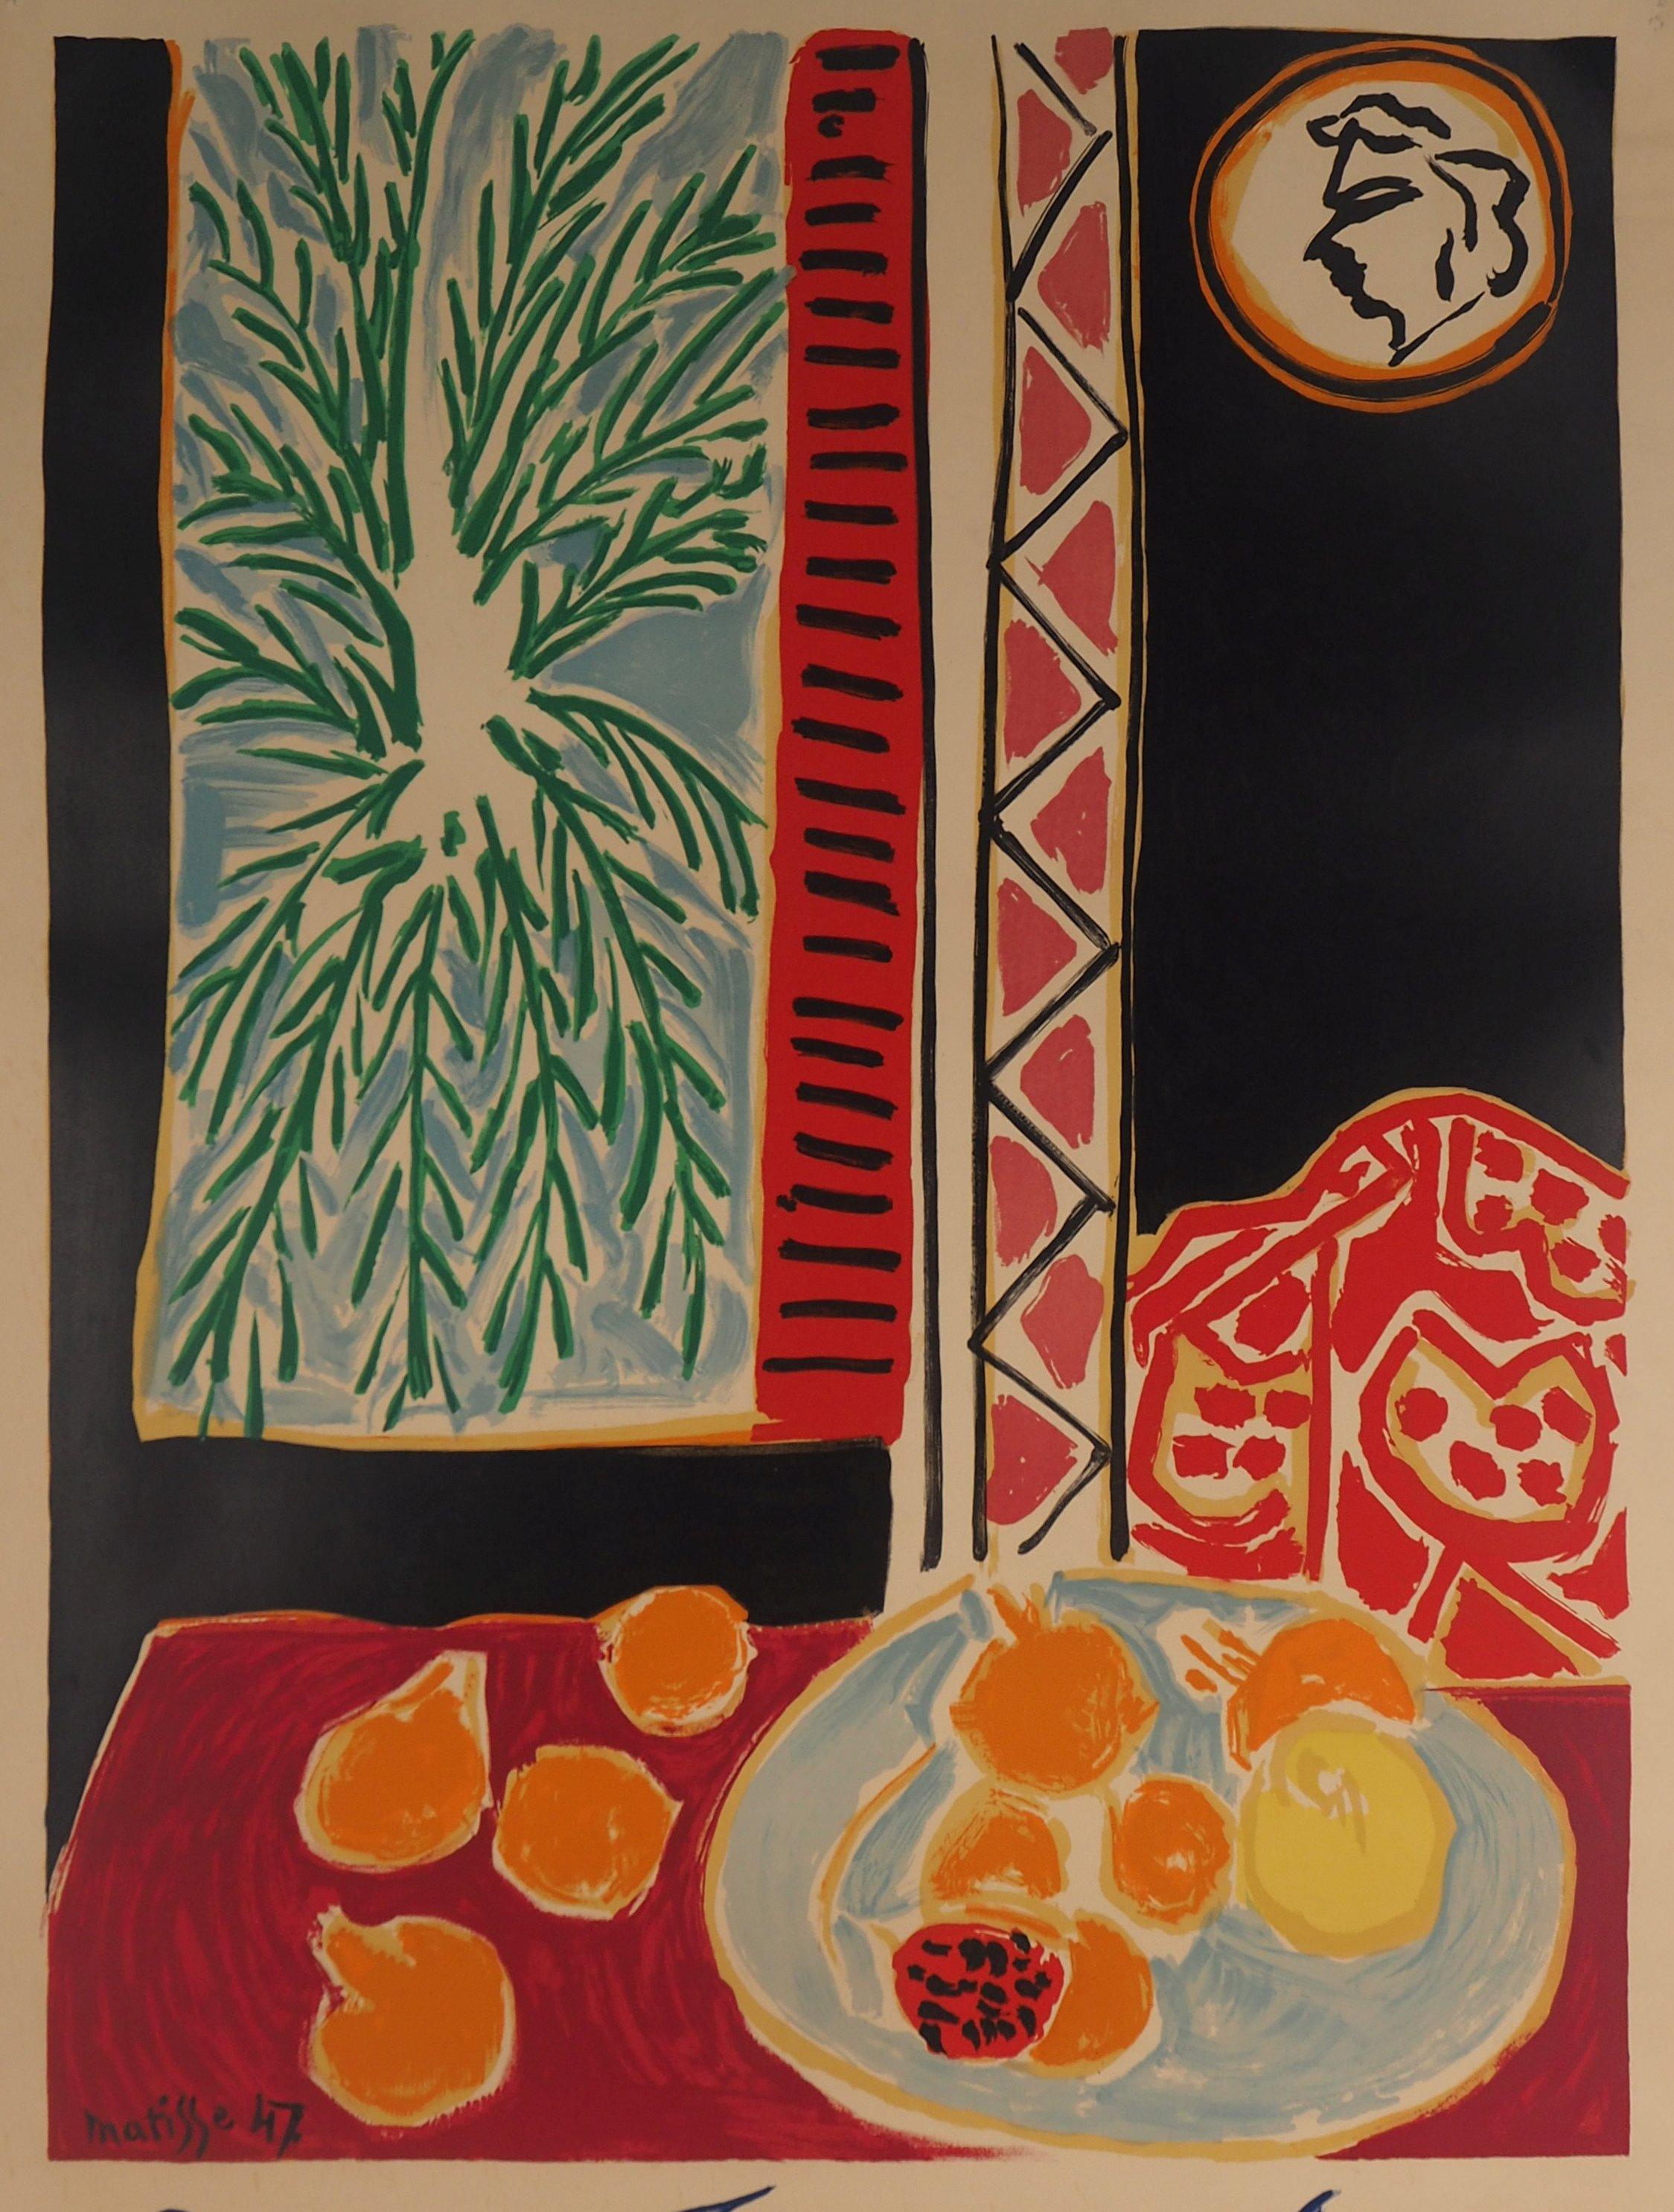 Nice, Travail, Joie (French Riviera, Work & Joy) - Original lithograph (Mourlot) - Print by Henri Matisse